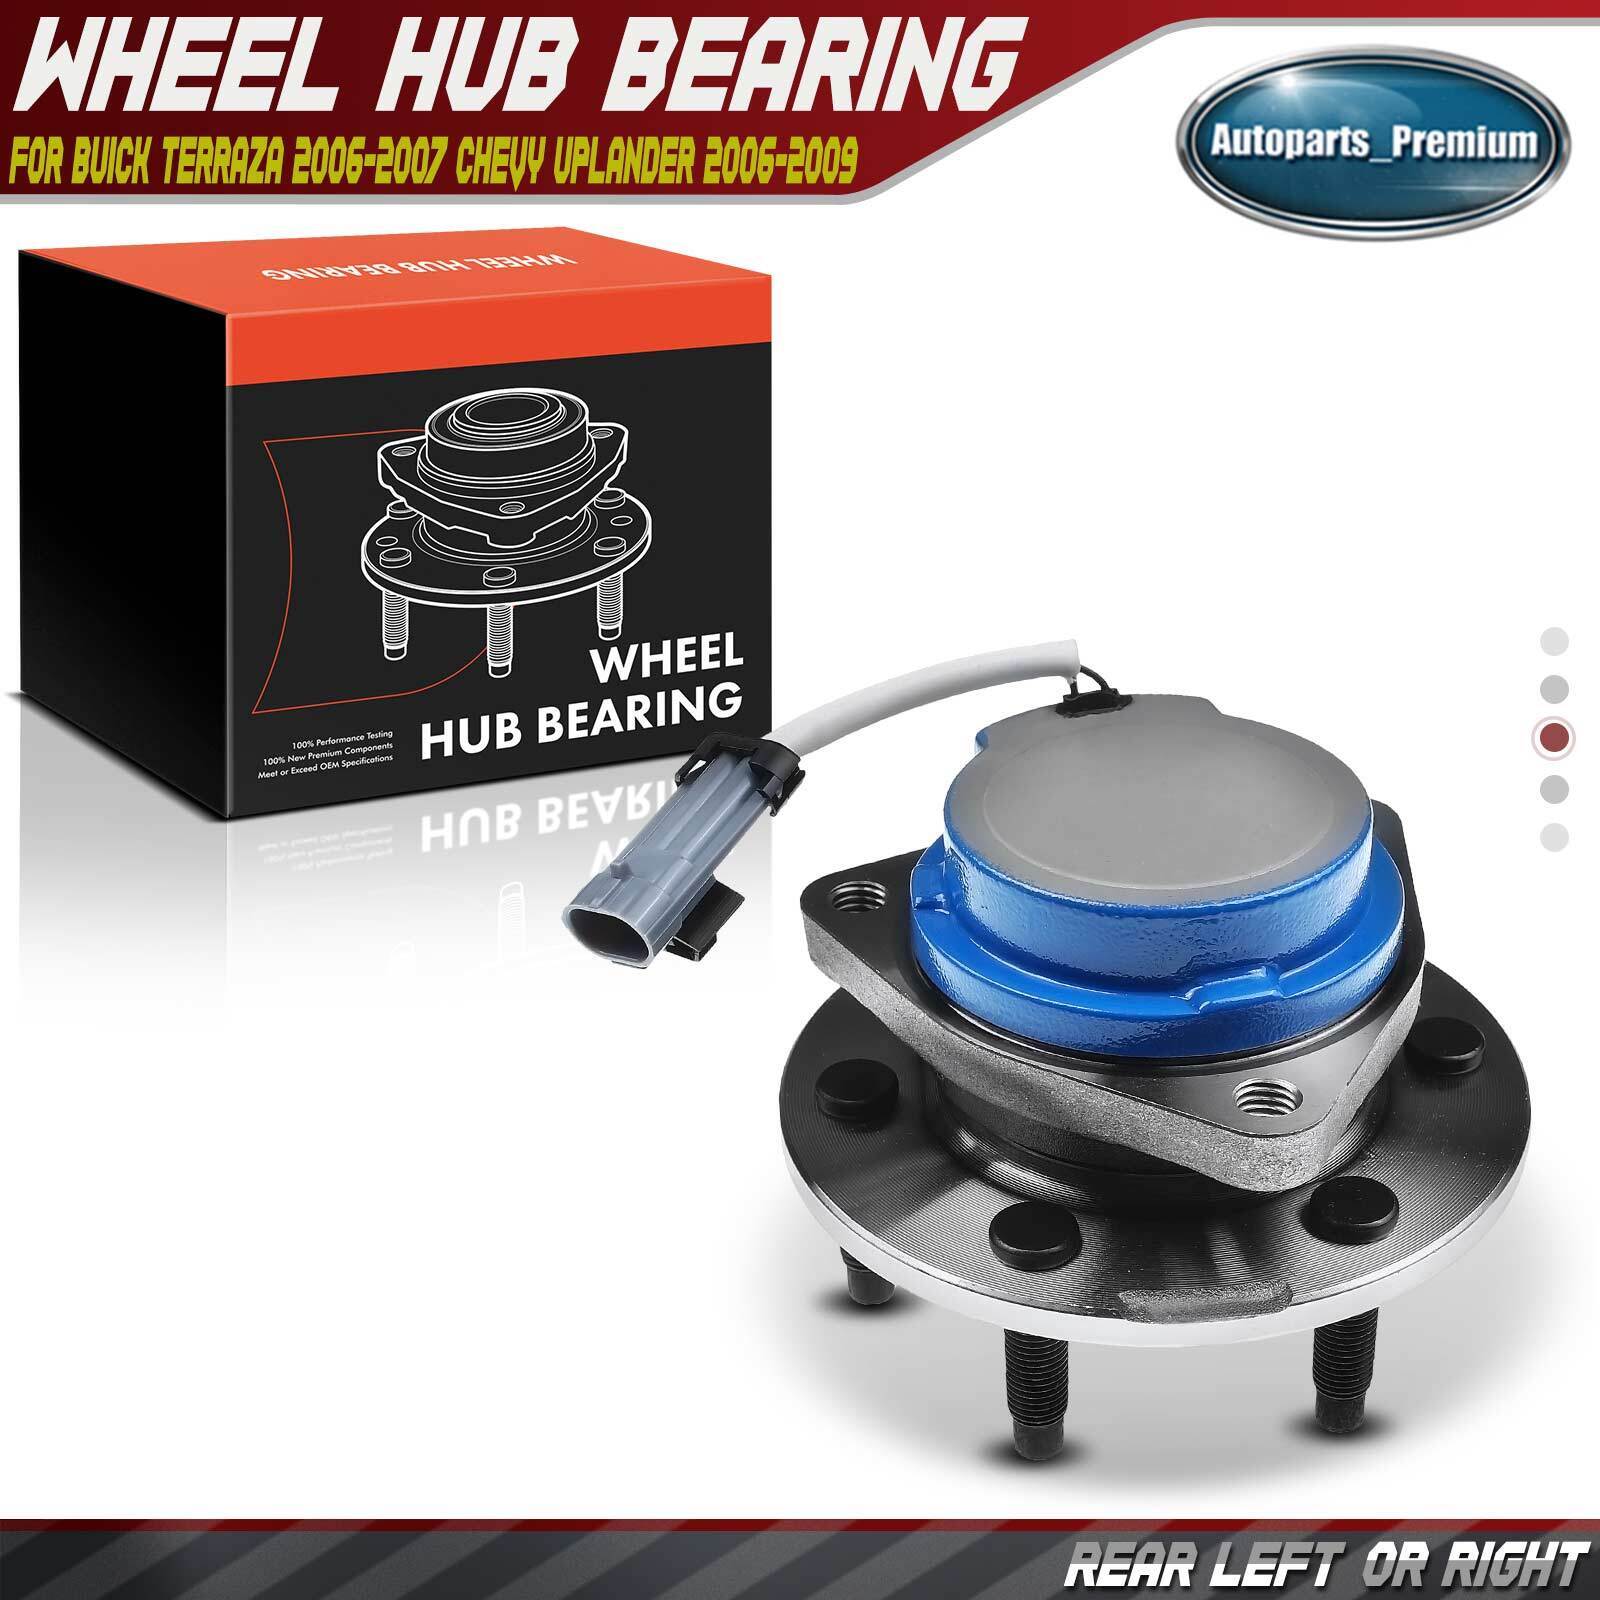 1x Wheel Hub Bearing Assembly for Chevy Uplander Buick Montana Cadillac CTS SRX